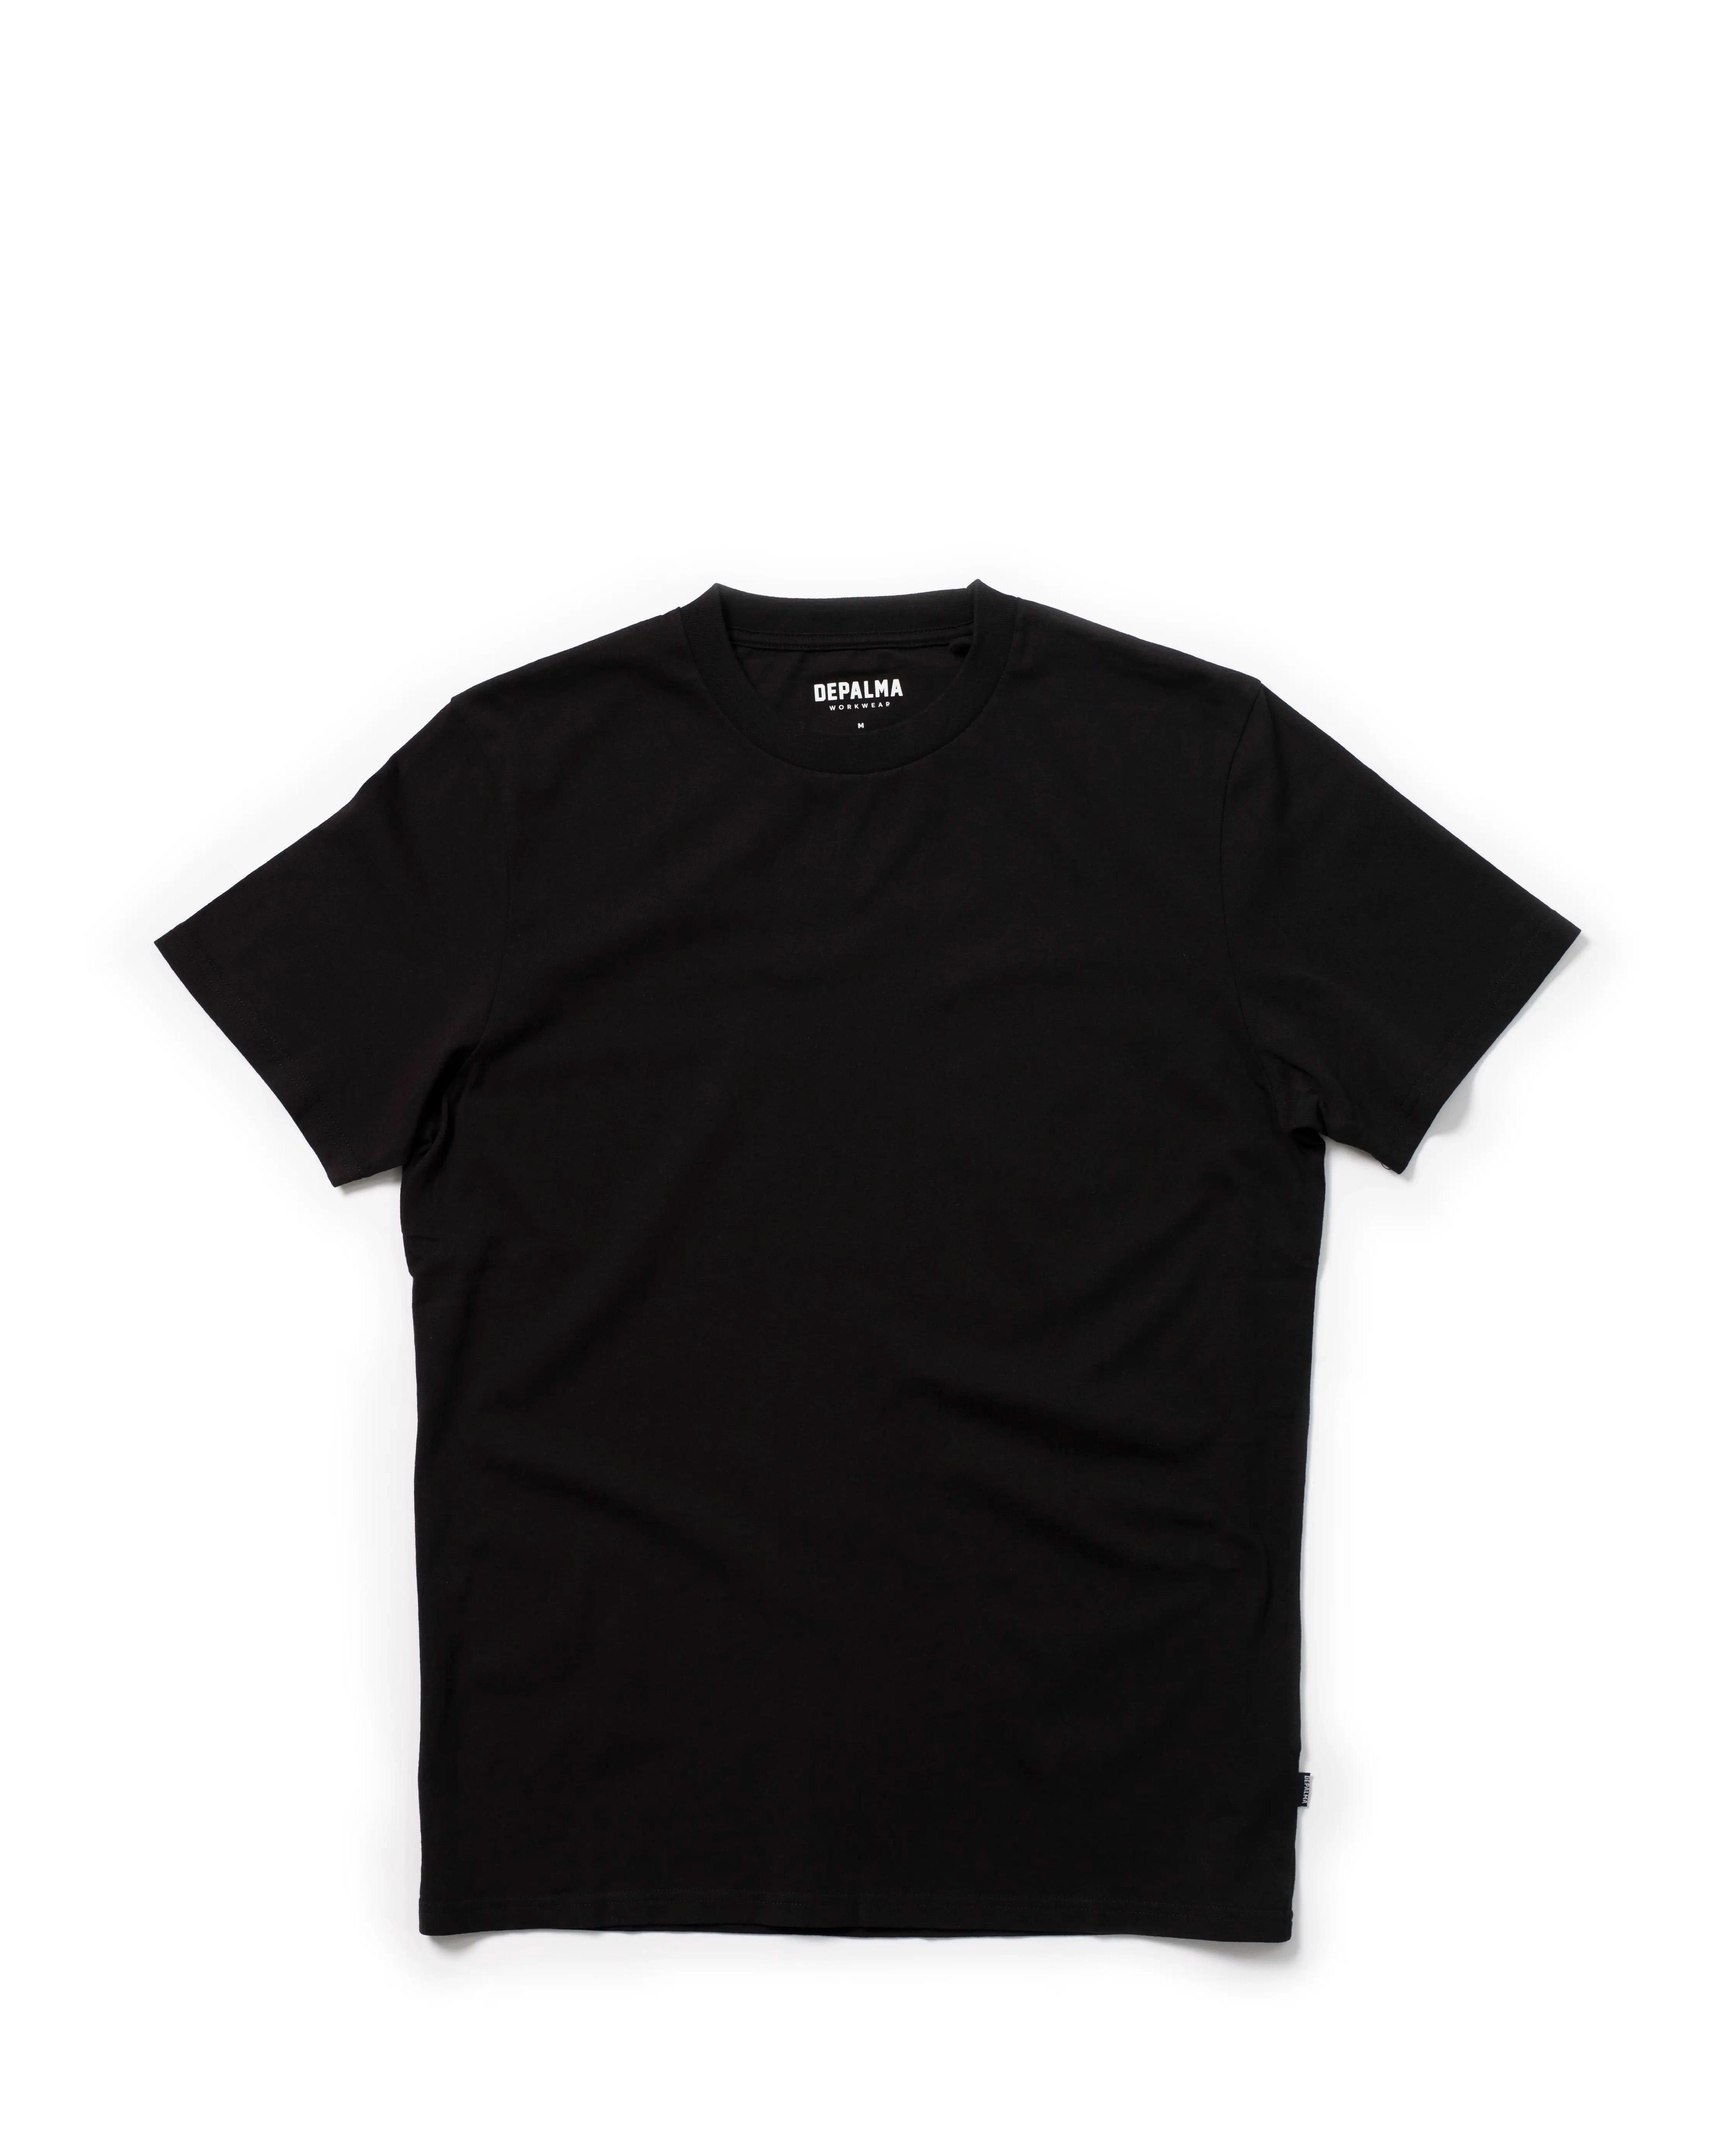 Photo of Profile S/S T-shirt, Black